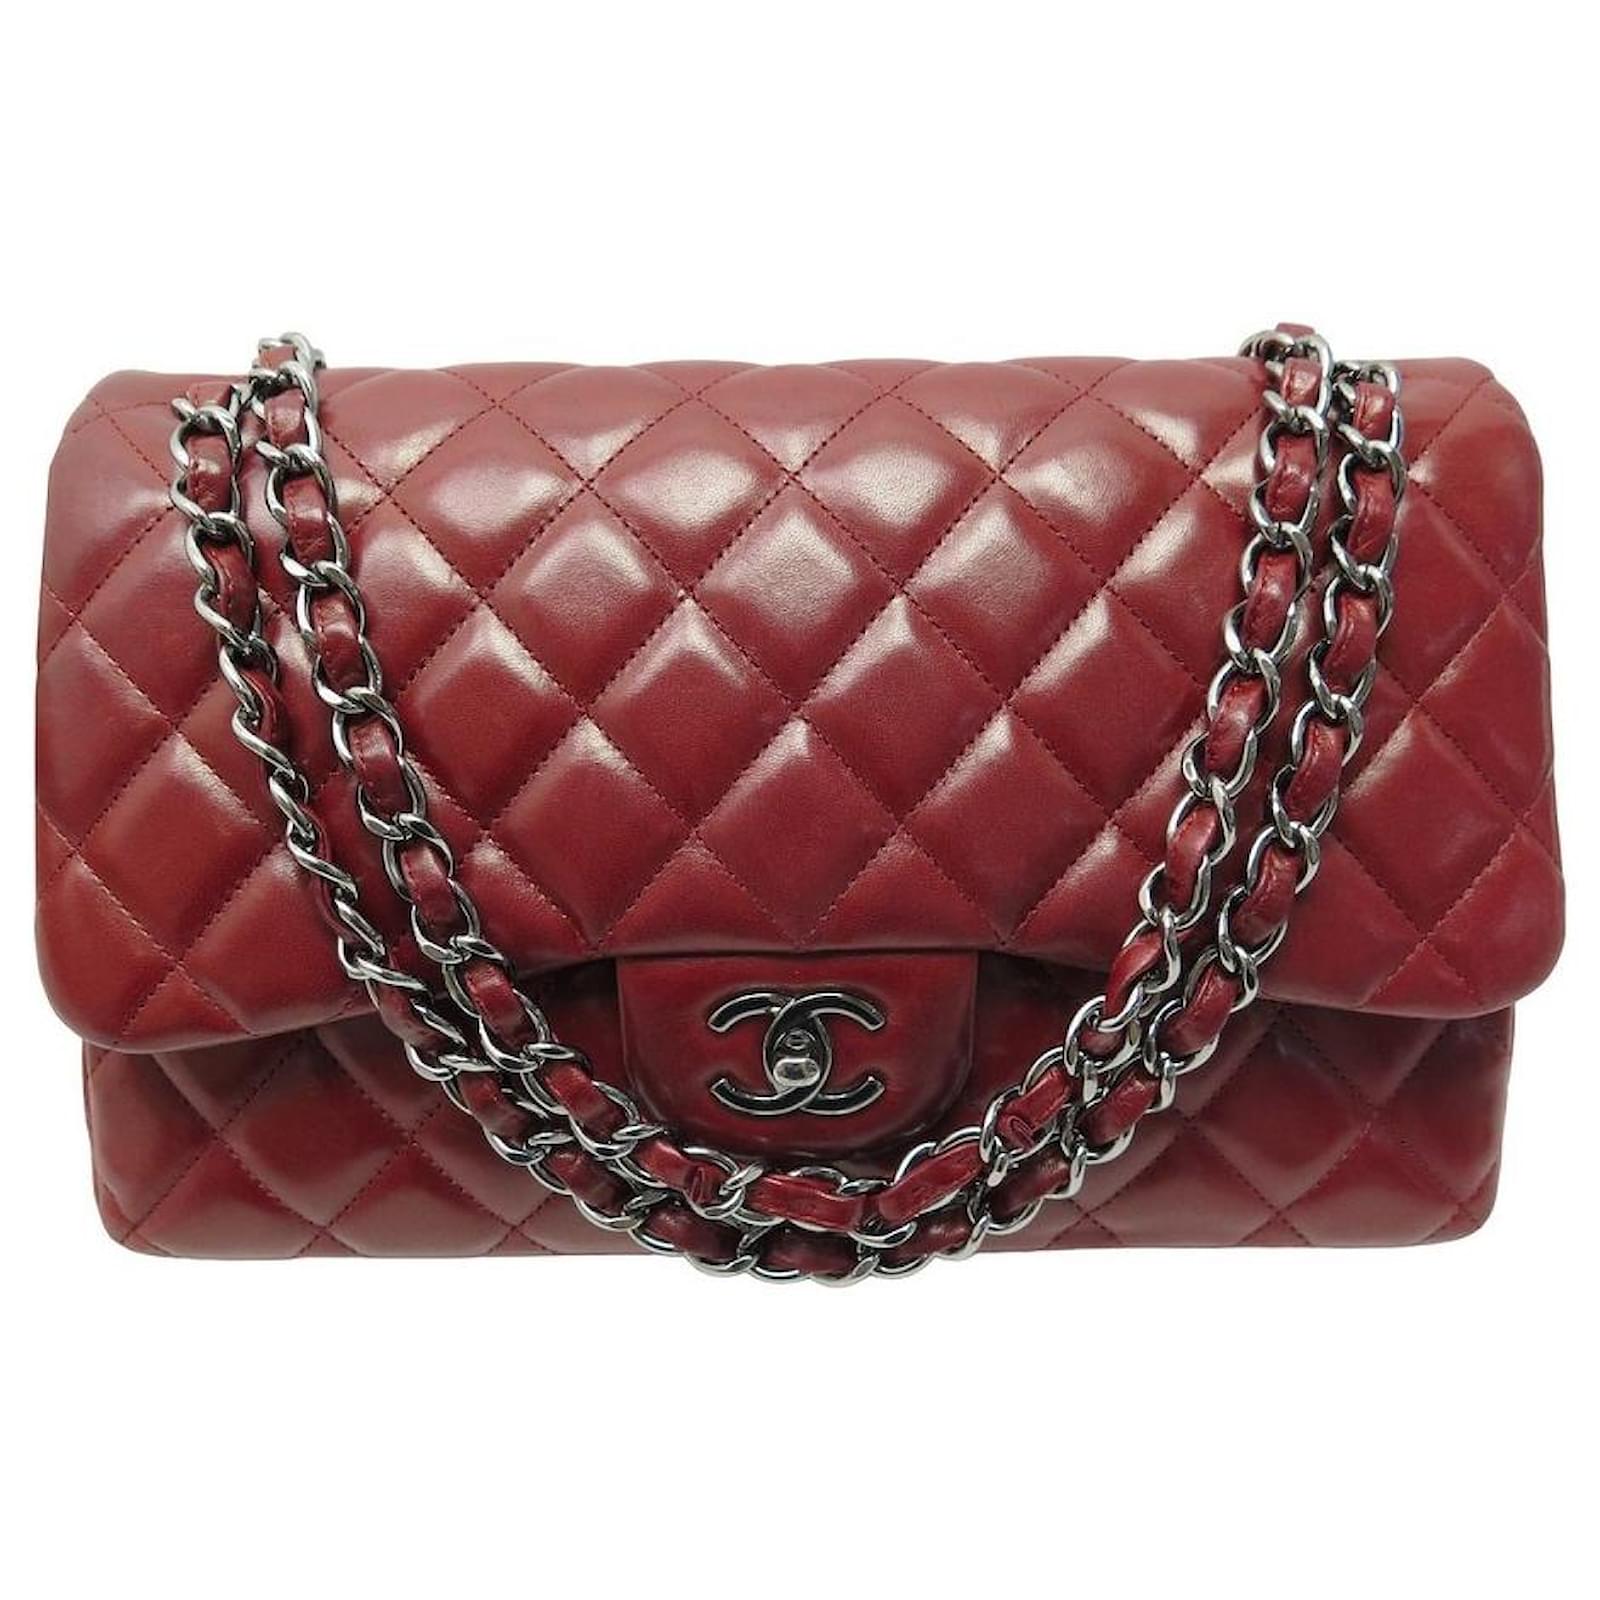 Handbags Chanel Chanel Classic Jumbo Timeless Red Leather Bandouliere Handbag